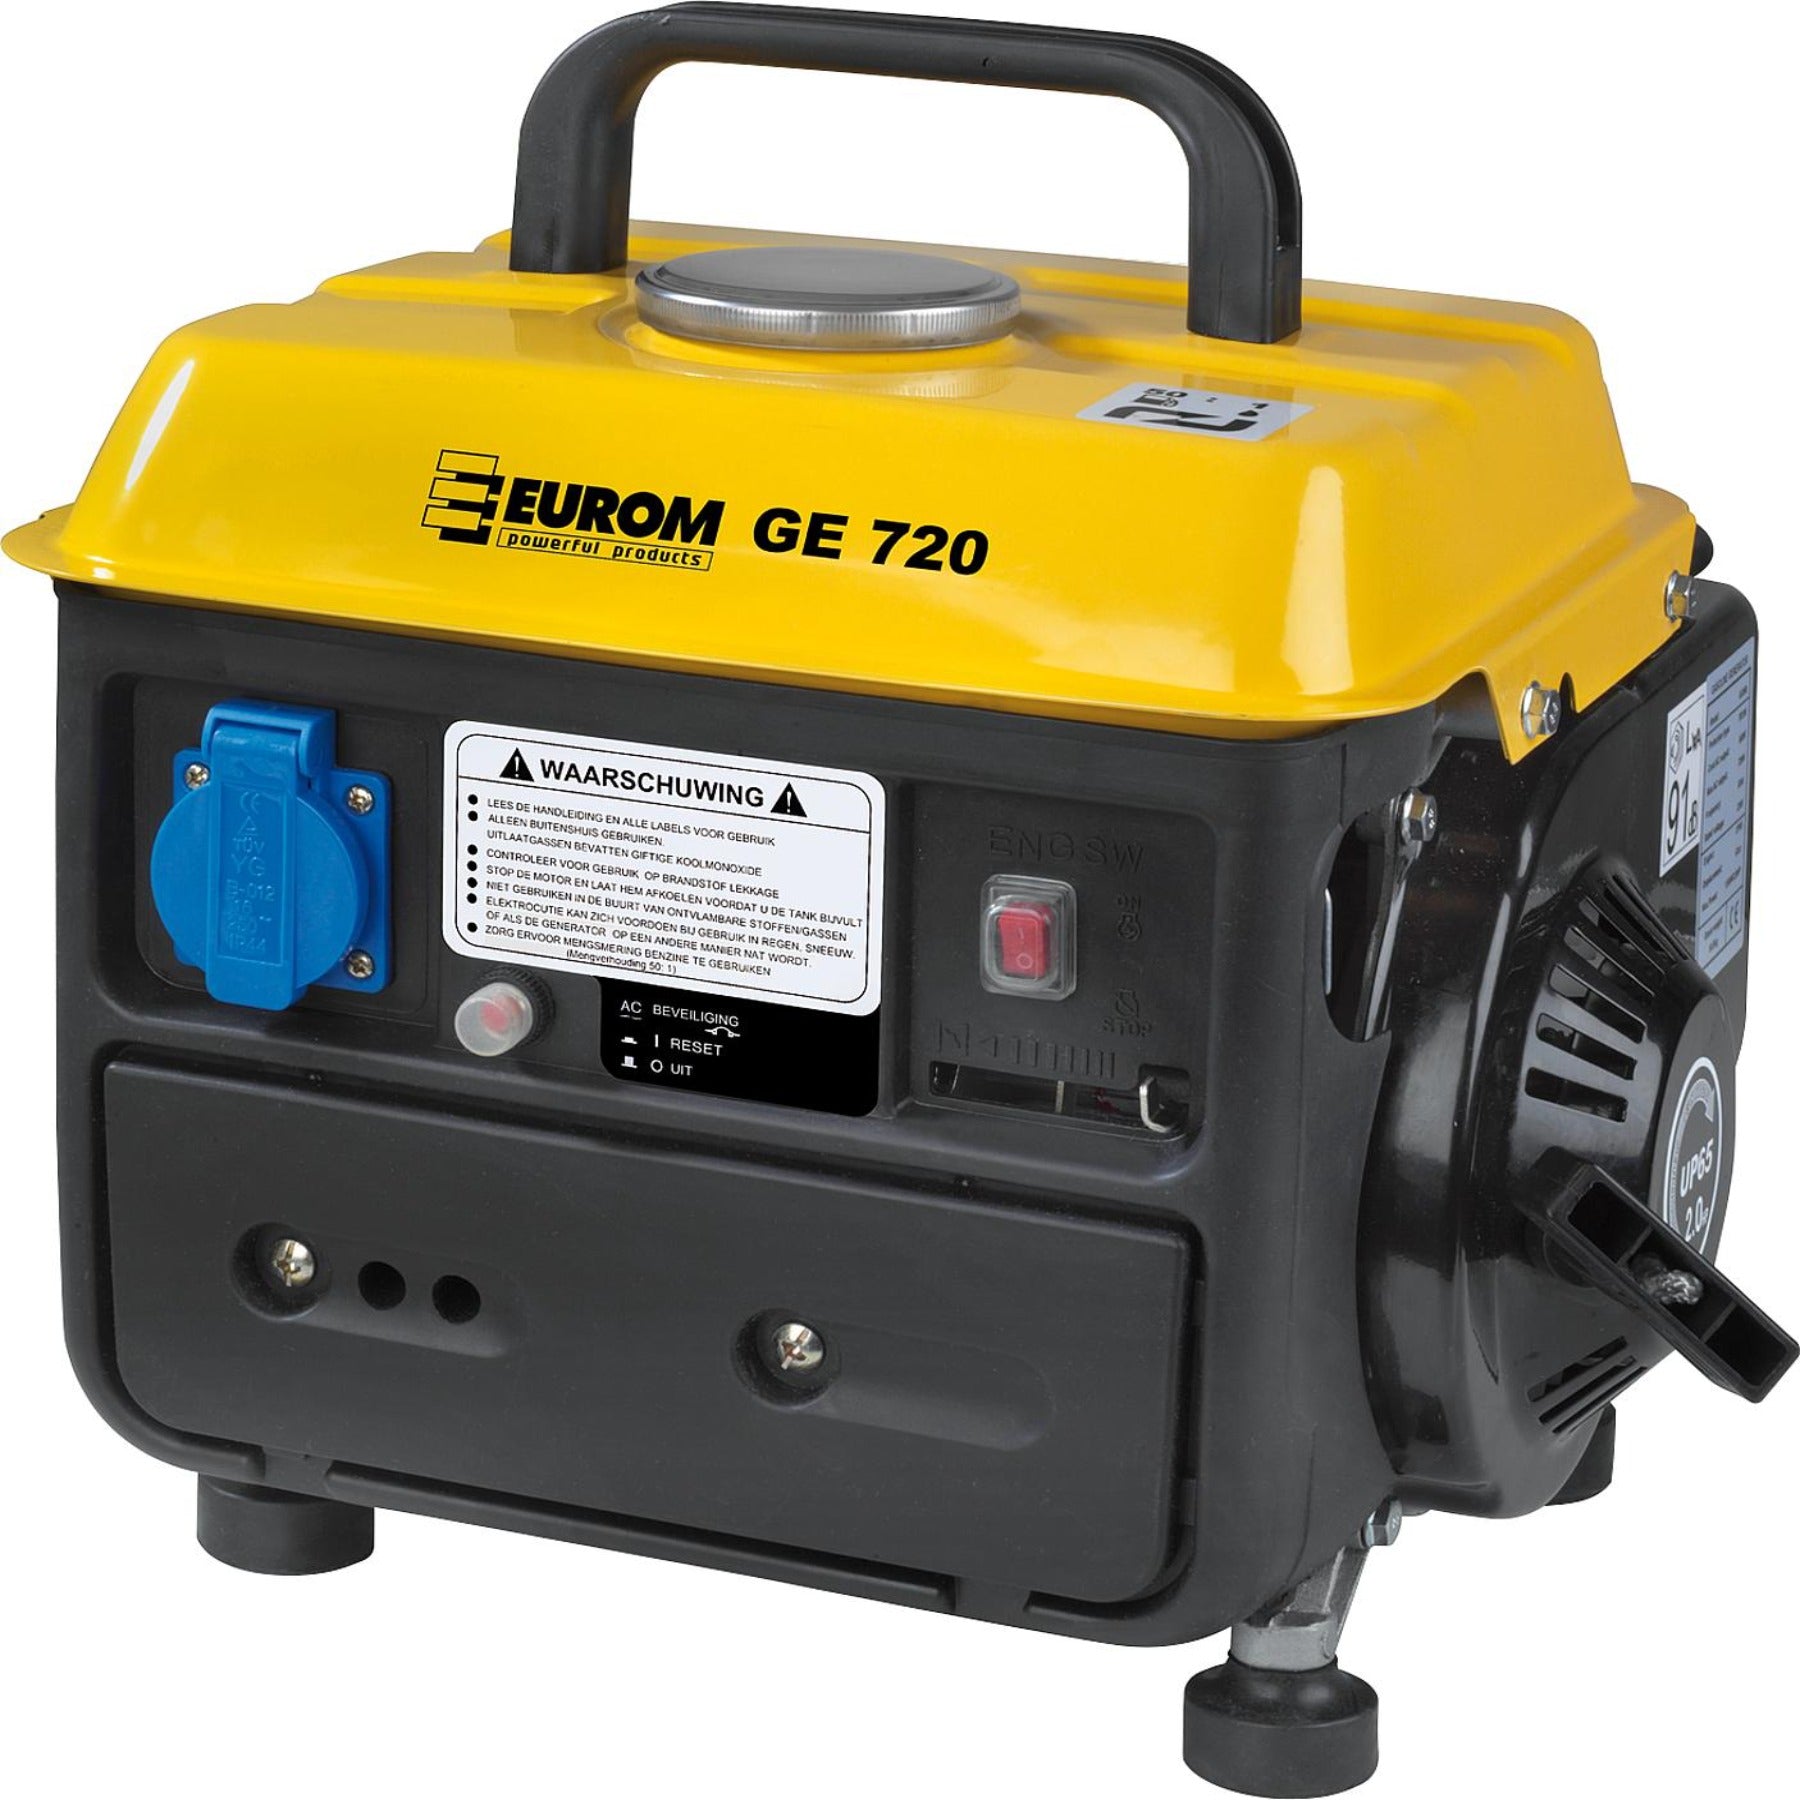 asdec life ® generator GE720 4.2 liter tank